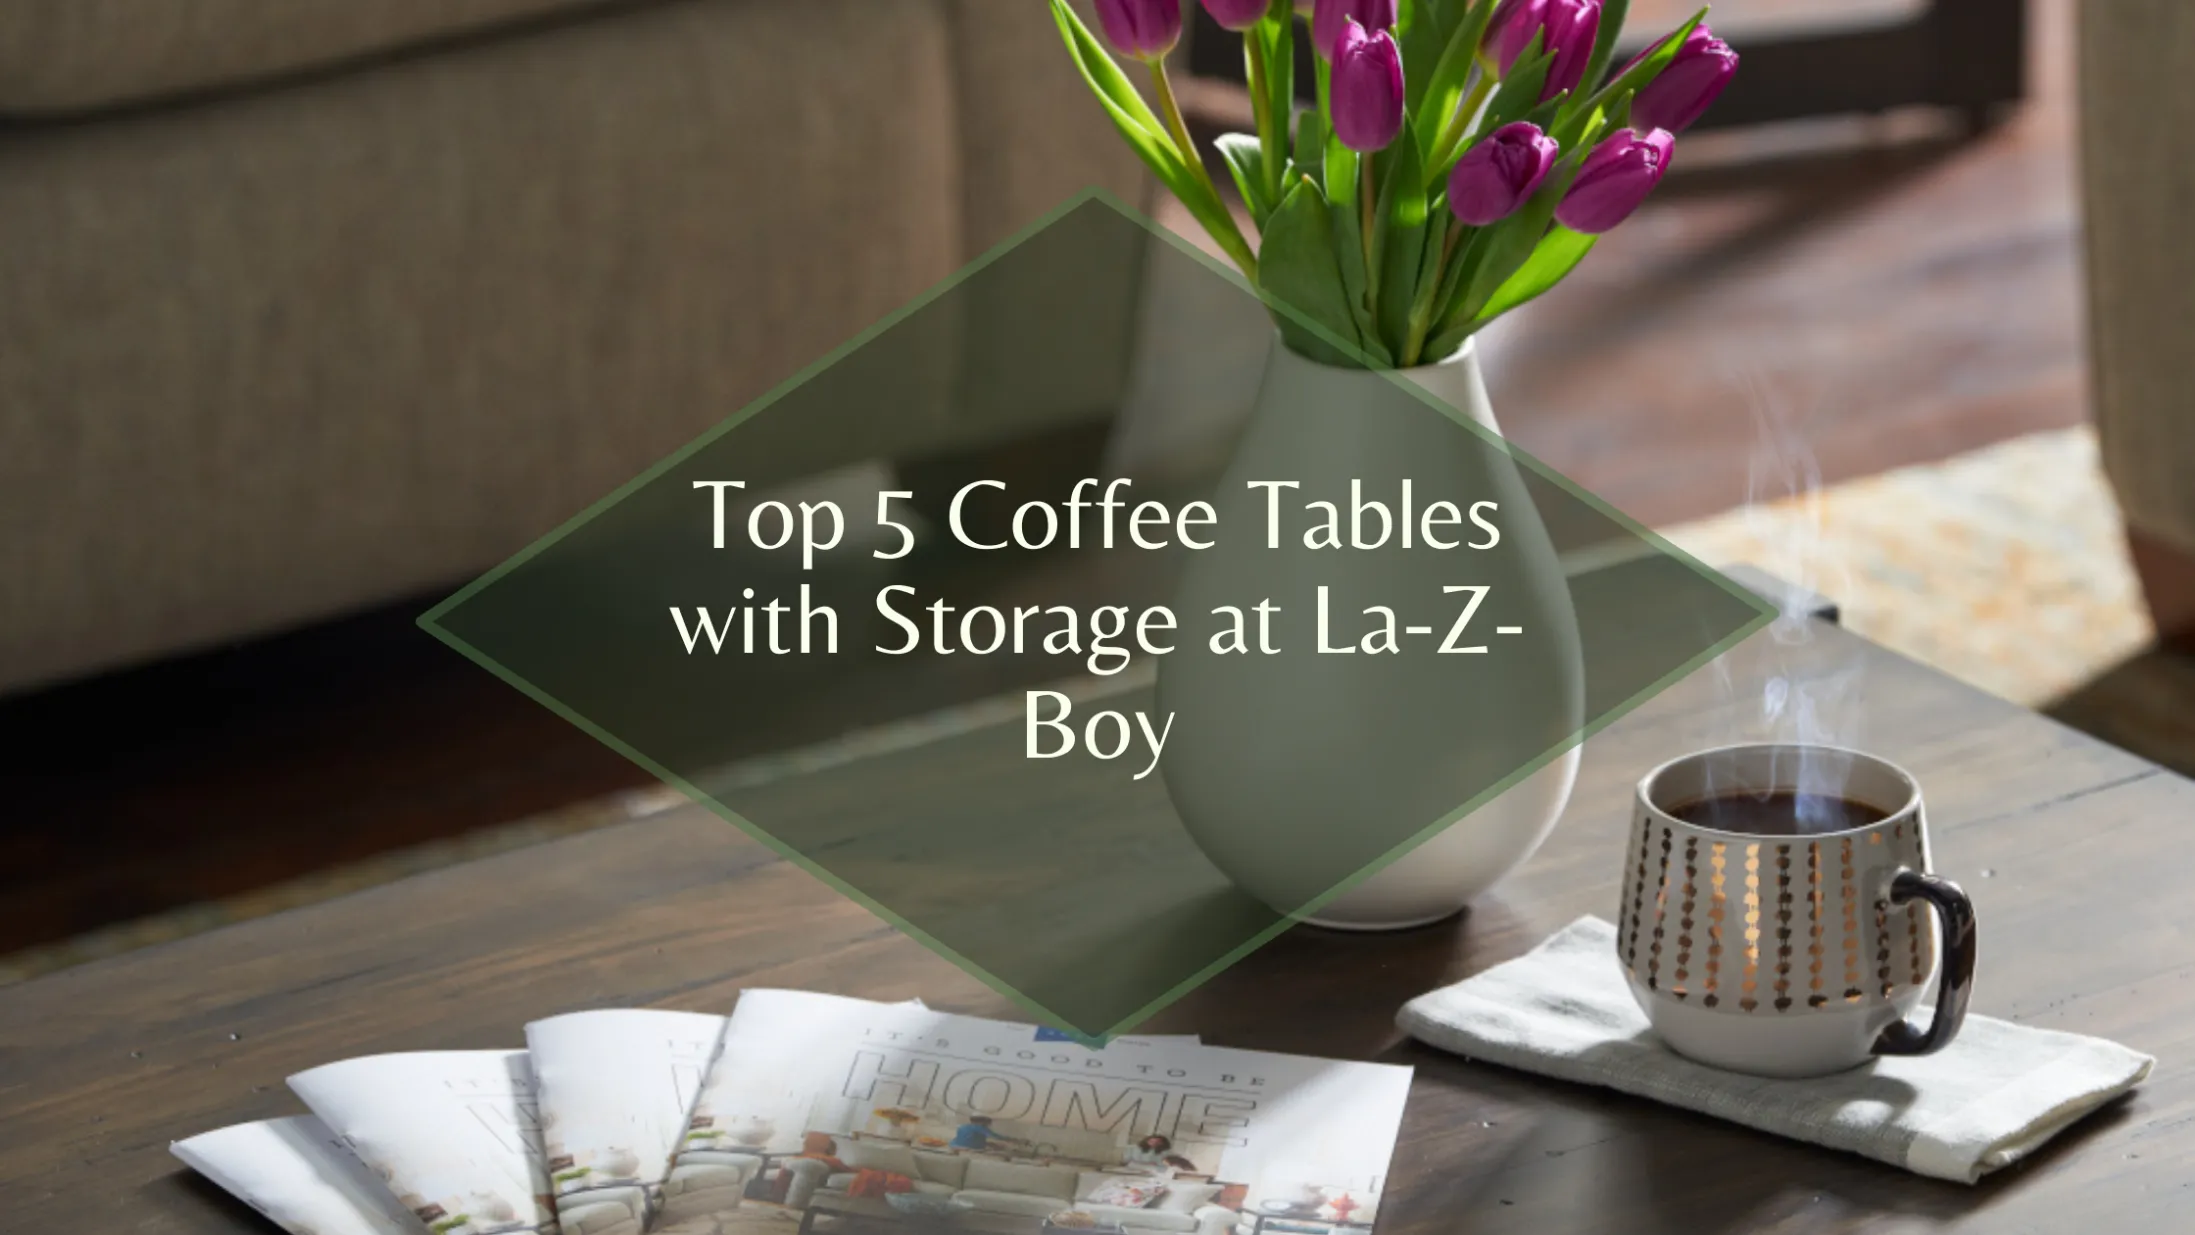 Top 5 Coffee Tables with Storage at La-Z-Boy